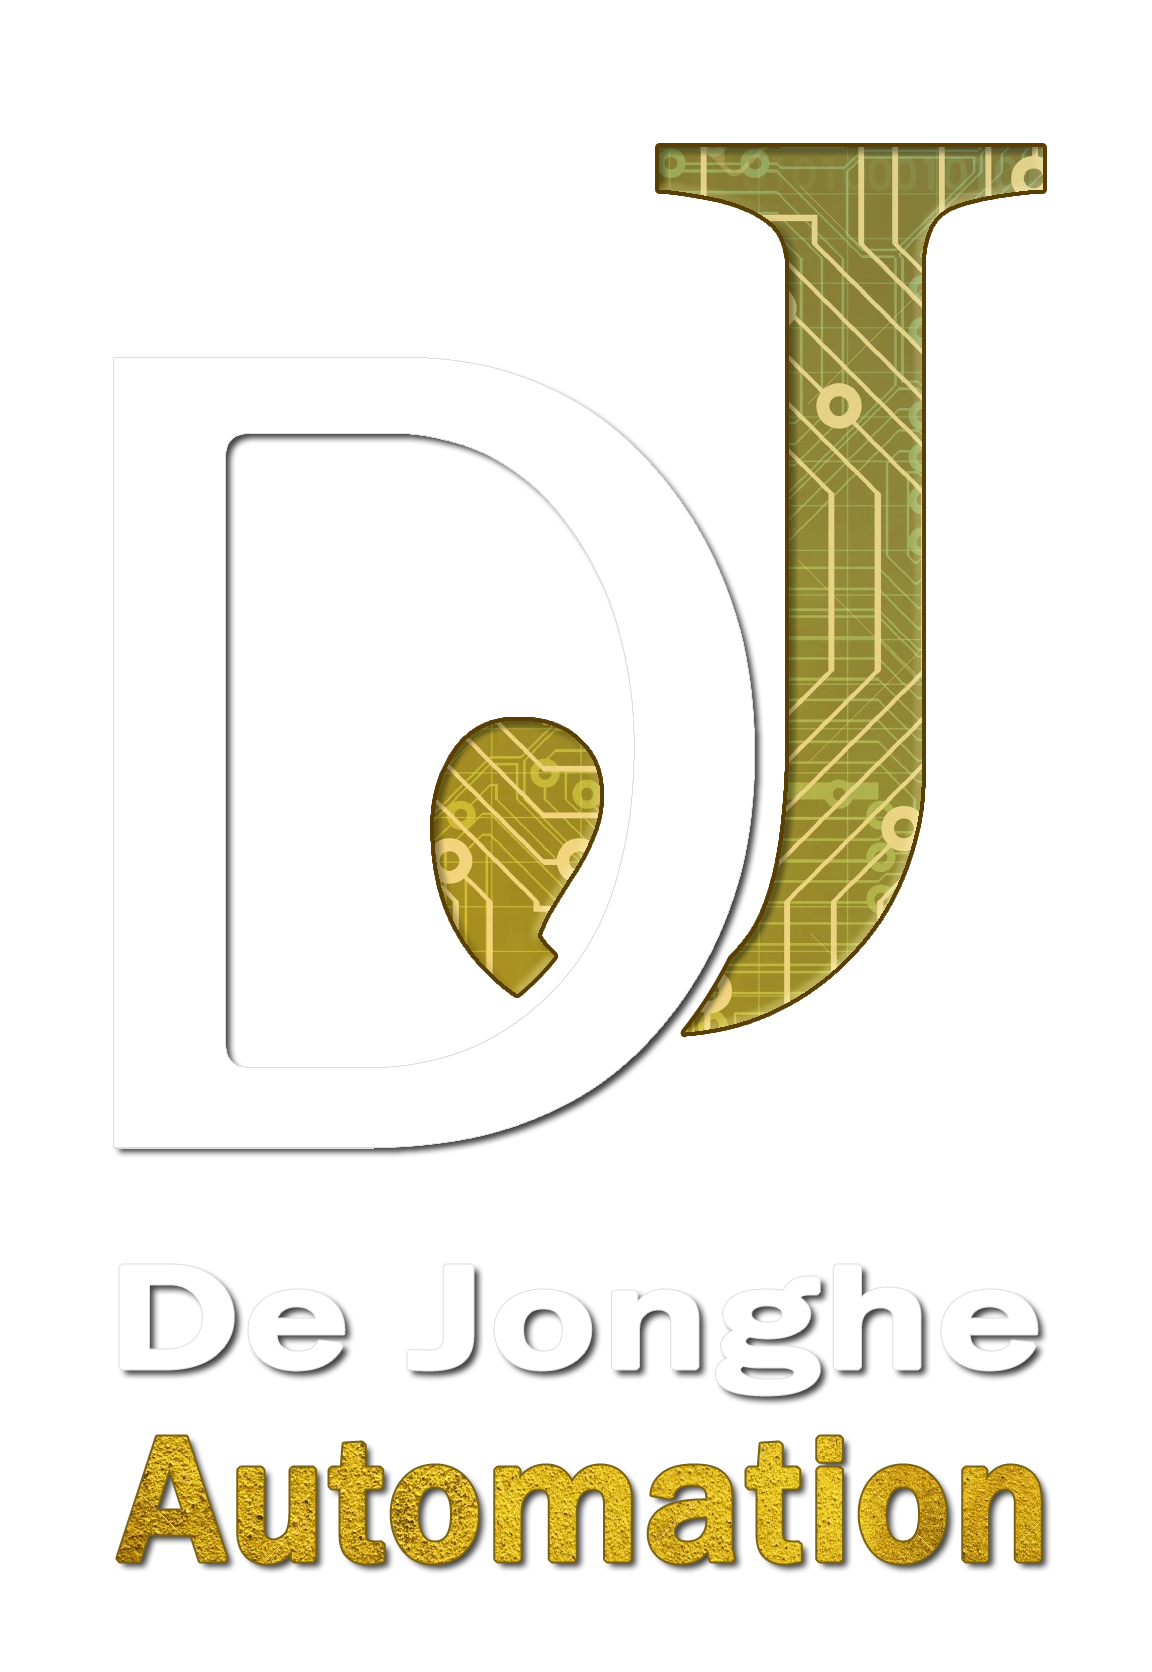 De Jonghe automation logo